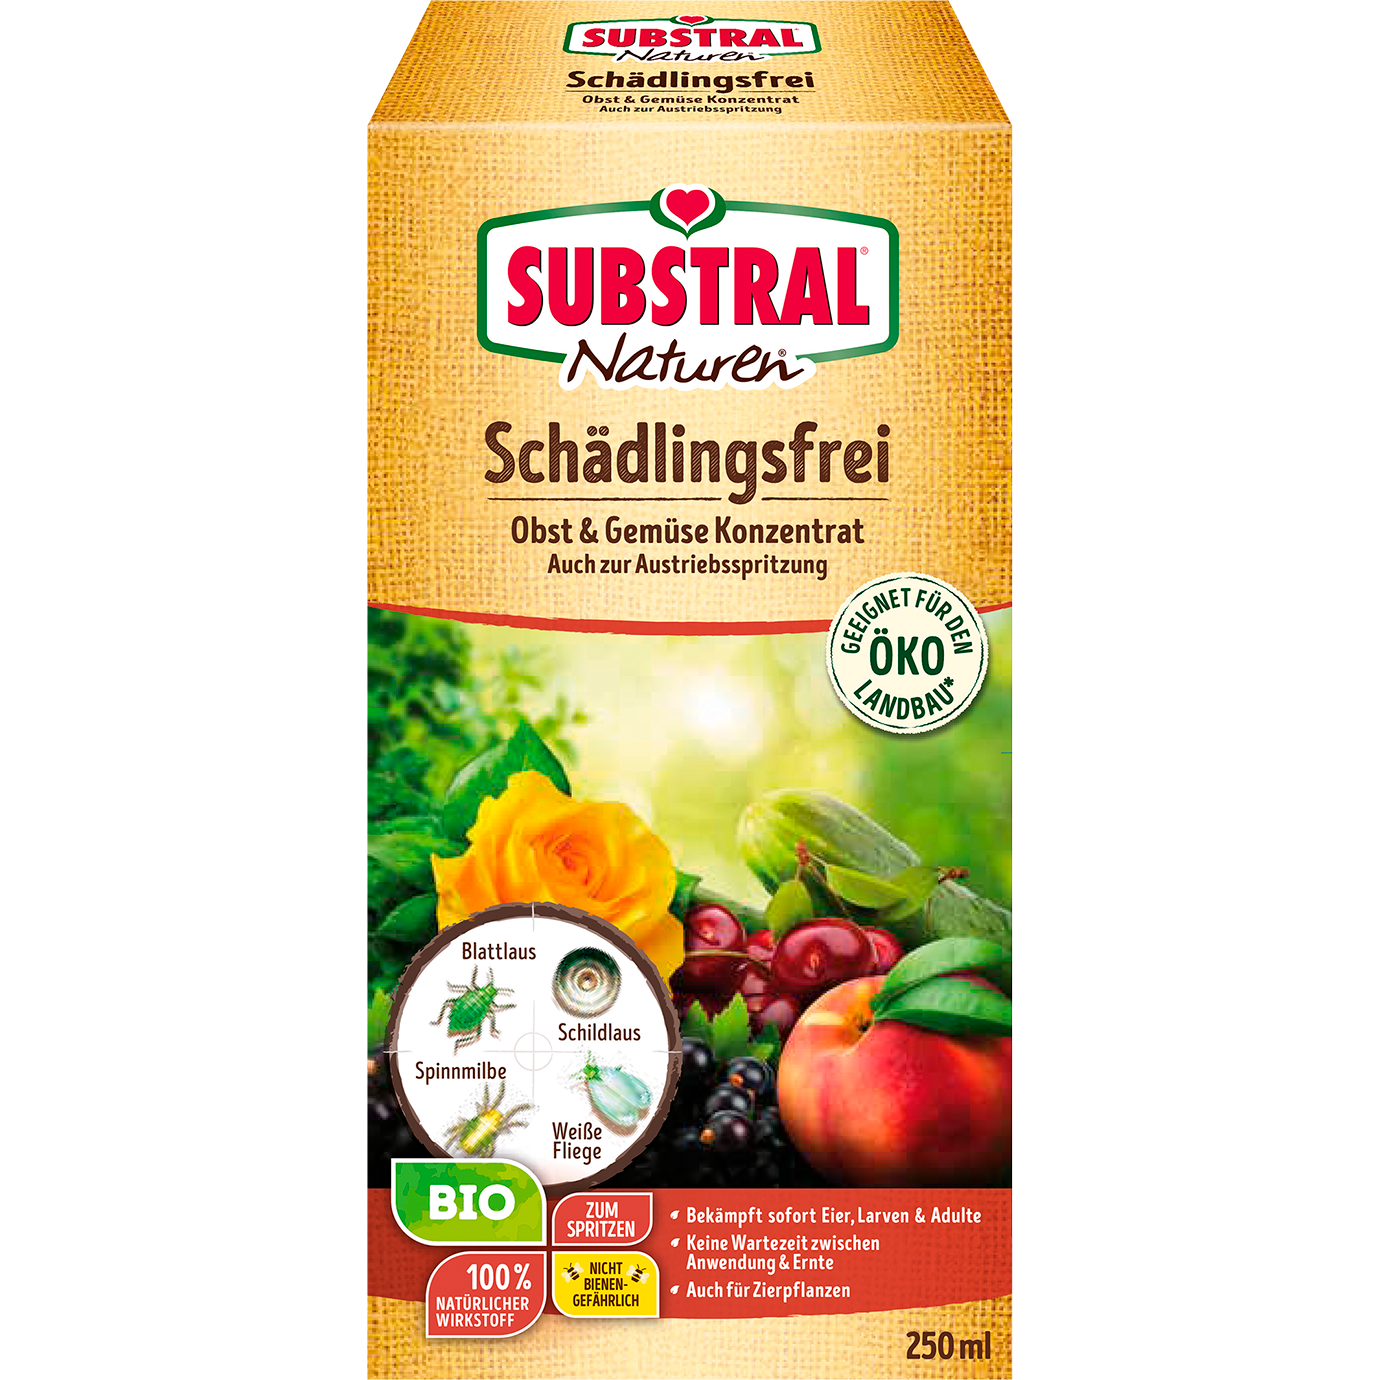 SUBSTRAL® Naturen® Bio Schädlingsfrei Obst & Gemüse Konzentrat